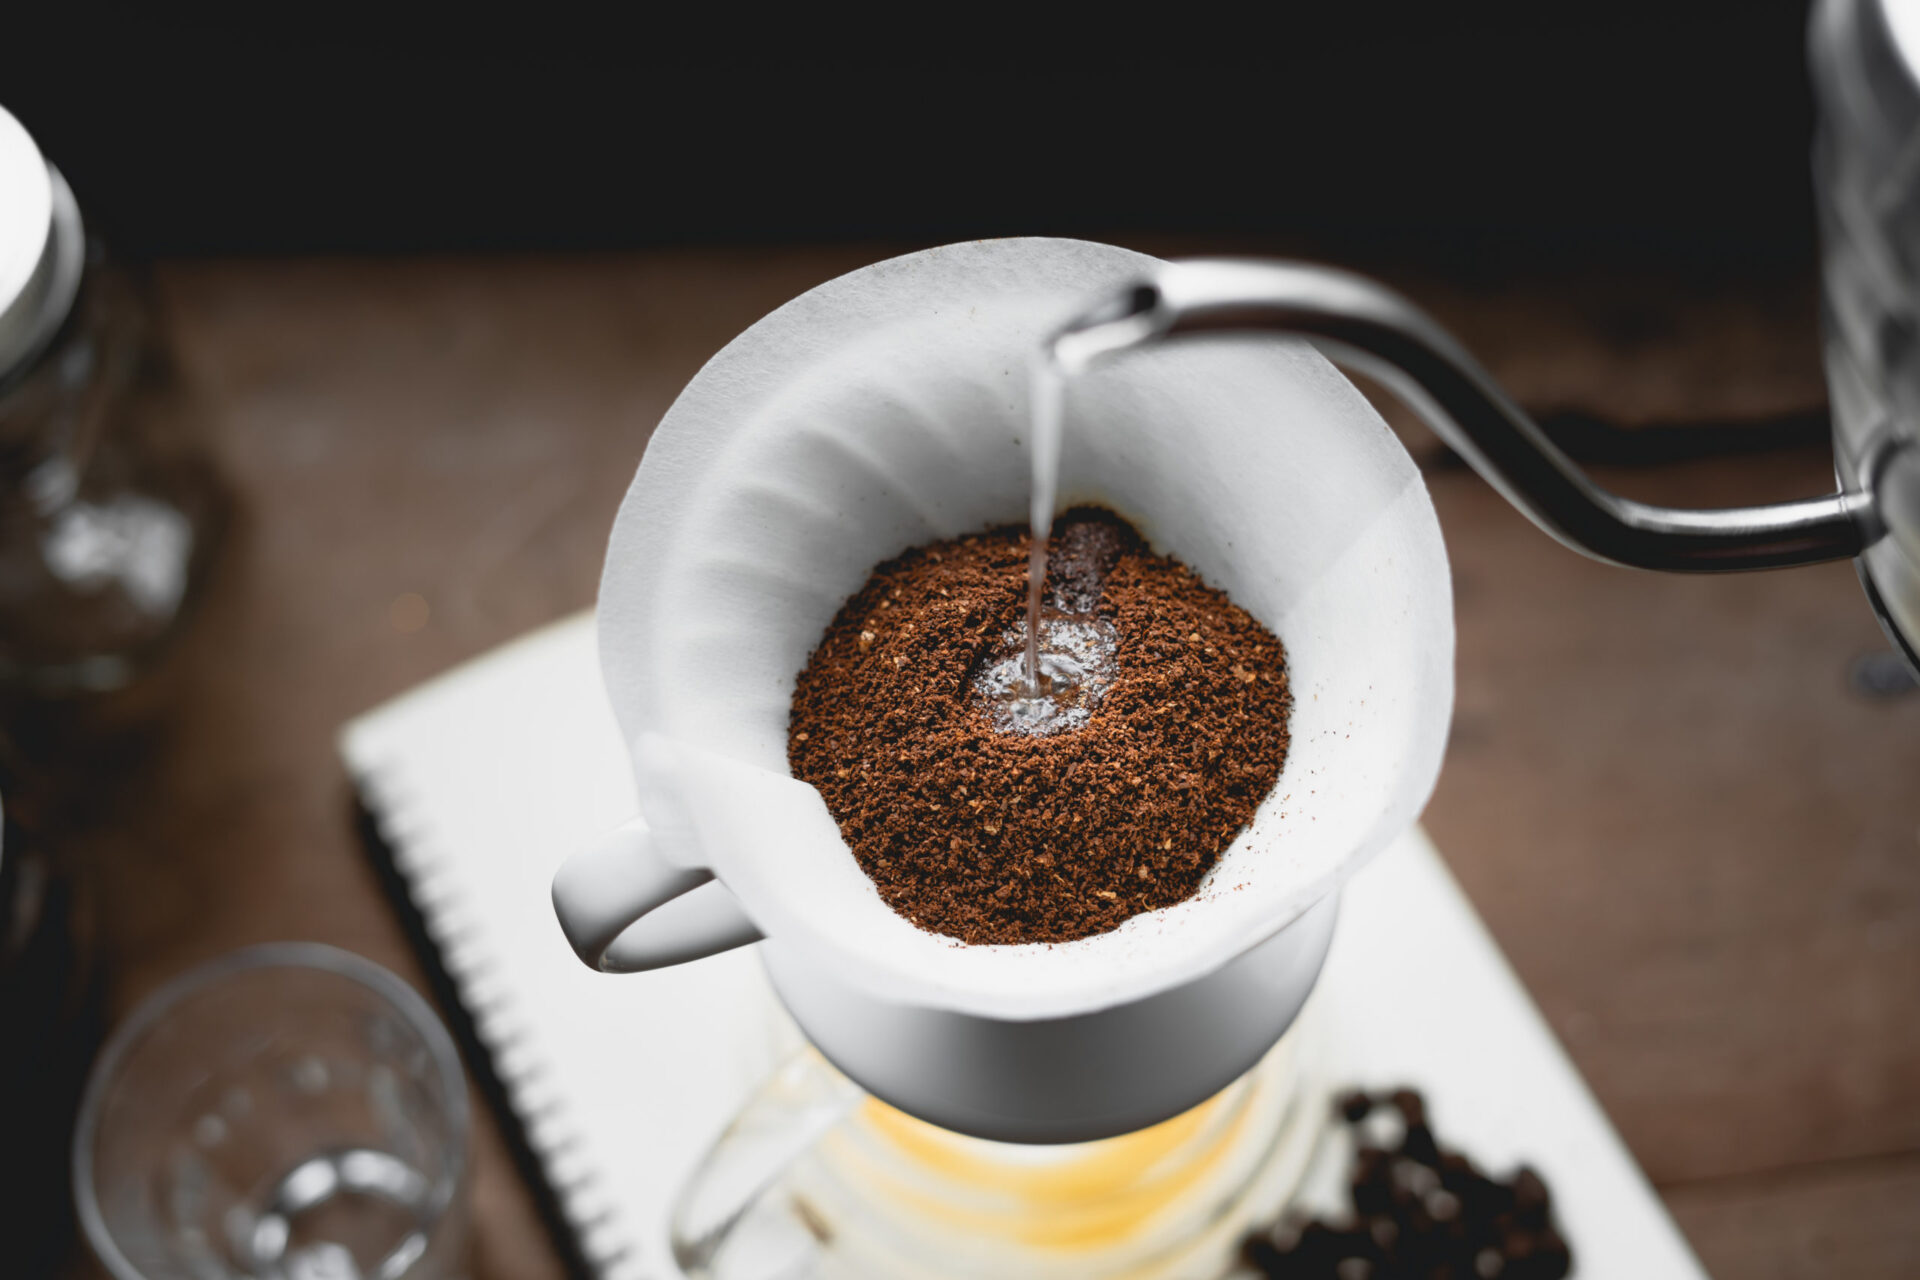 Filtro de café branco e filtro de café natural: Qual a diferença